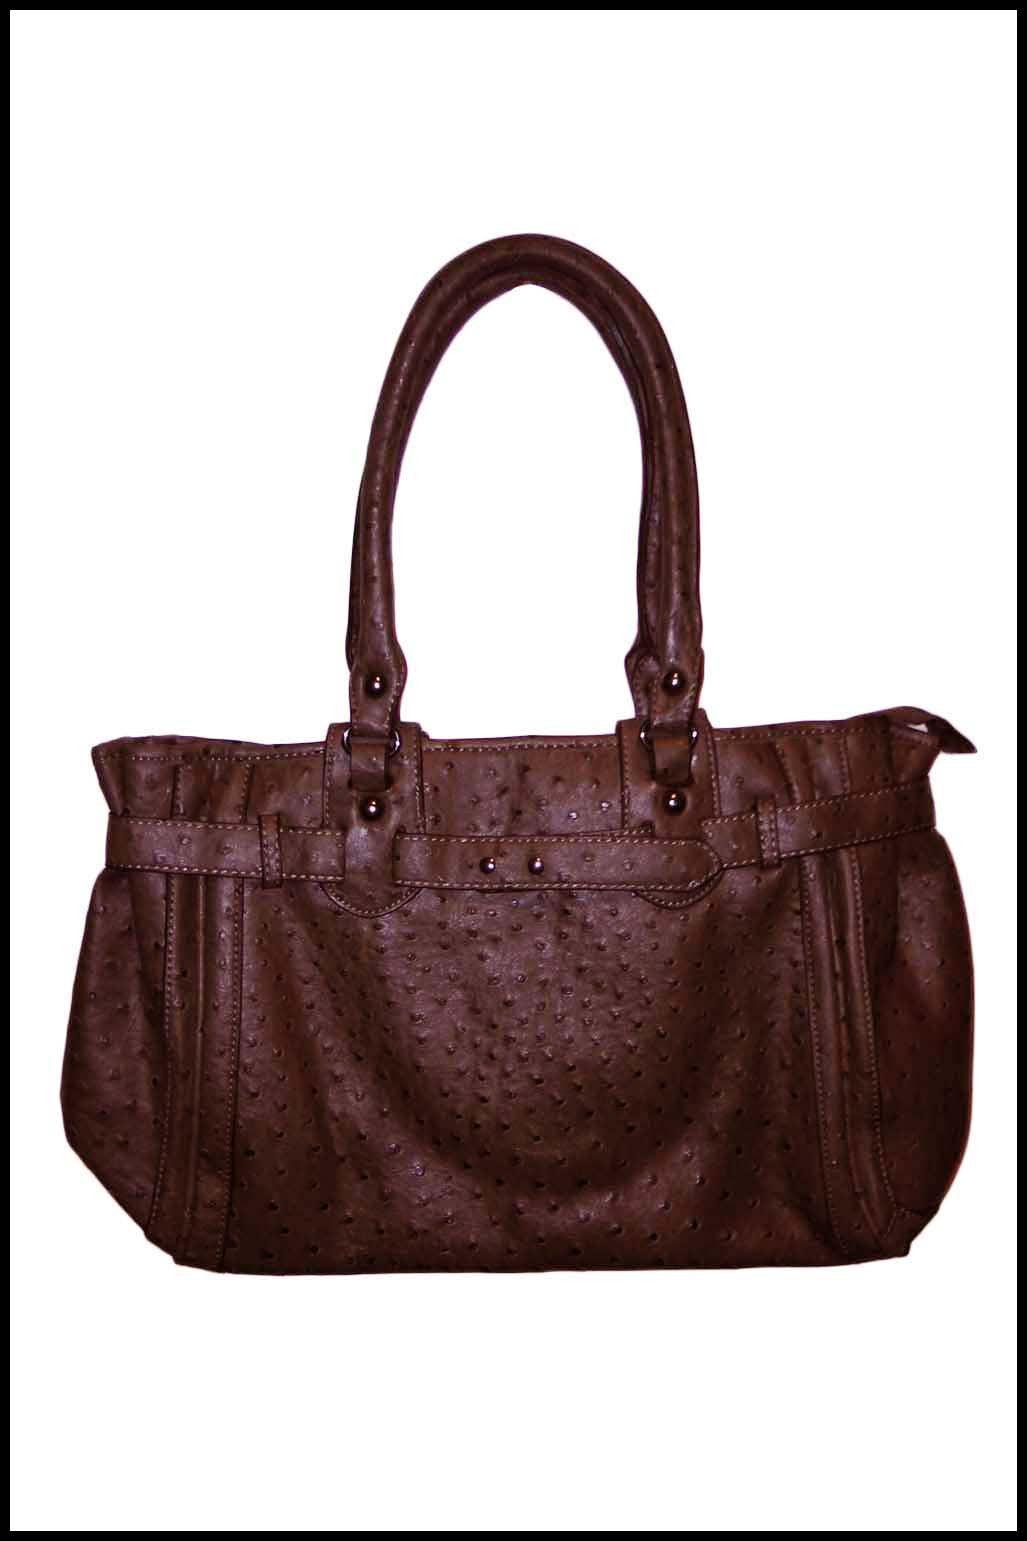 Ostrich Print Handbag with Belt Detailing